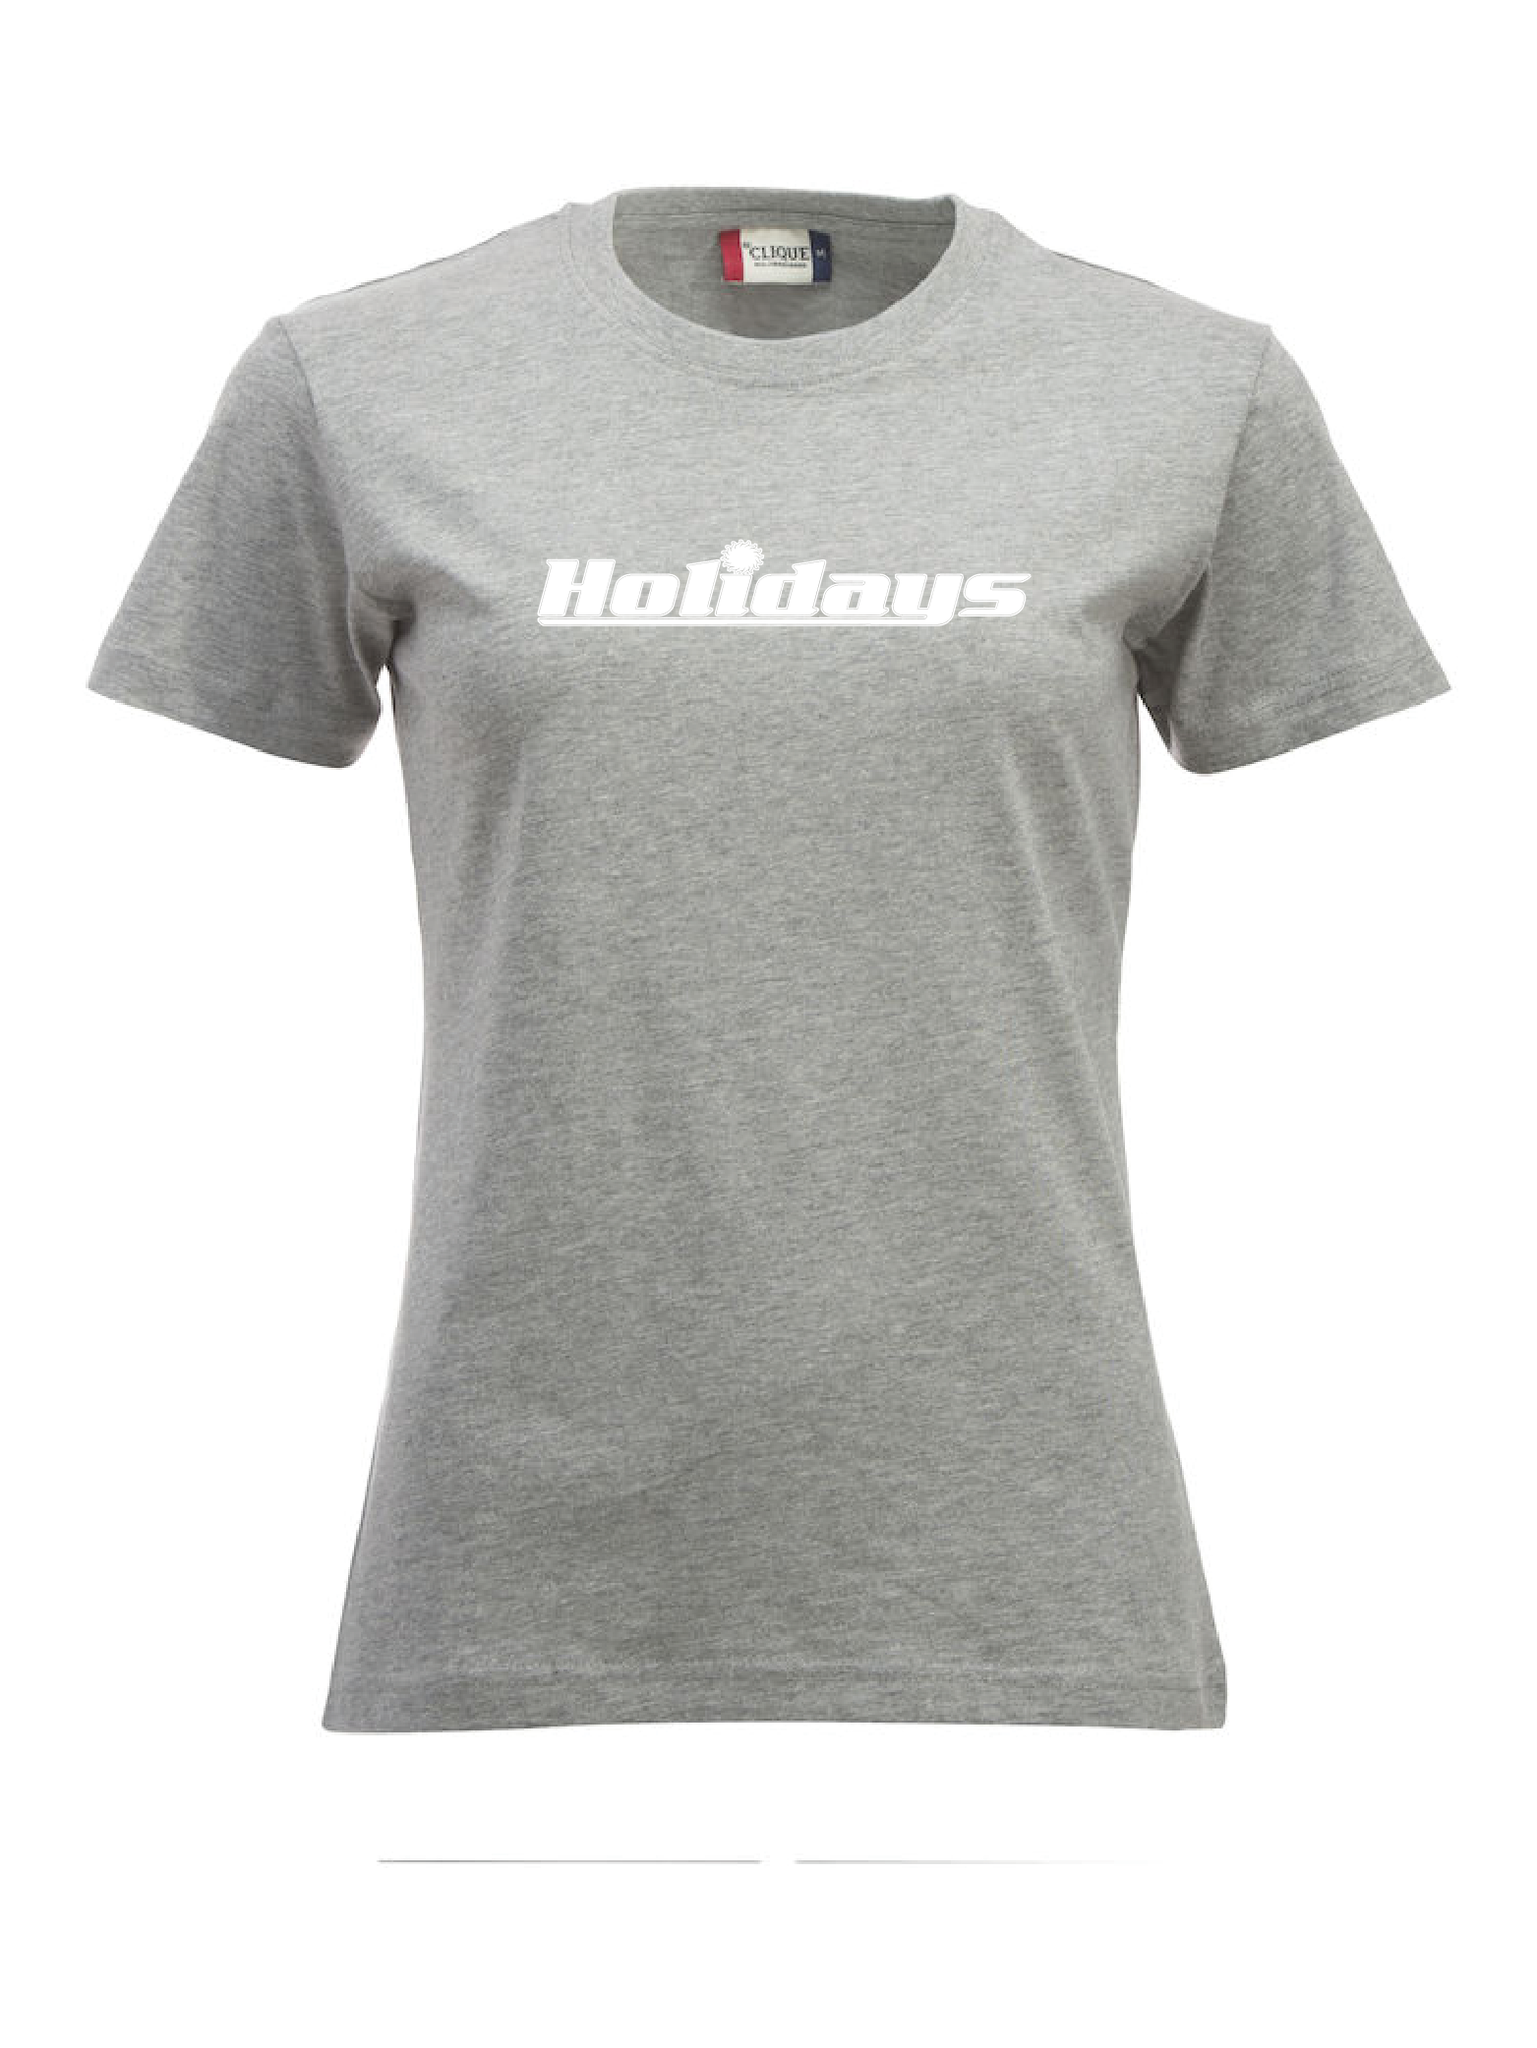 Grå Dam T-shirt "HOLIDAYS"